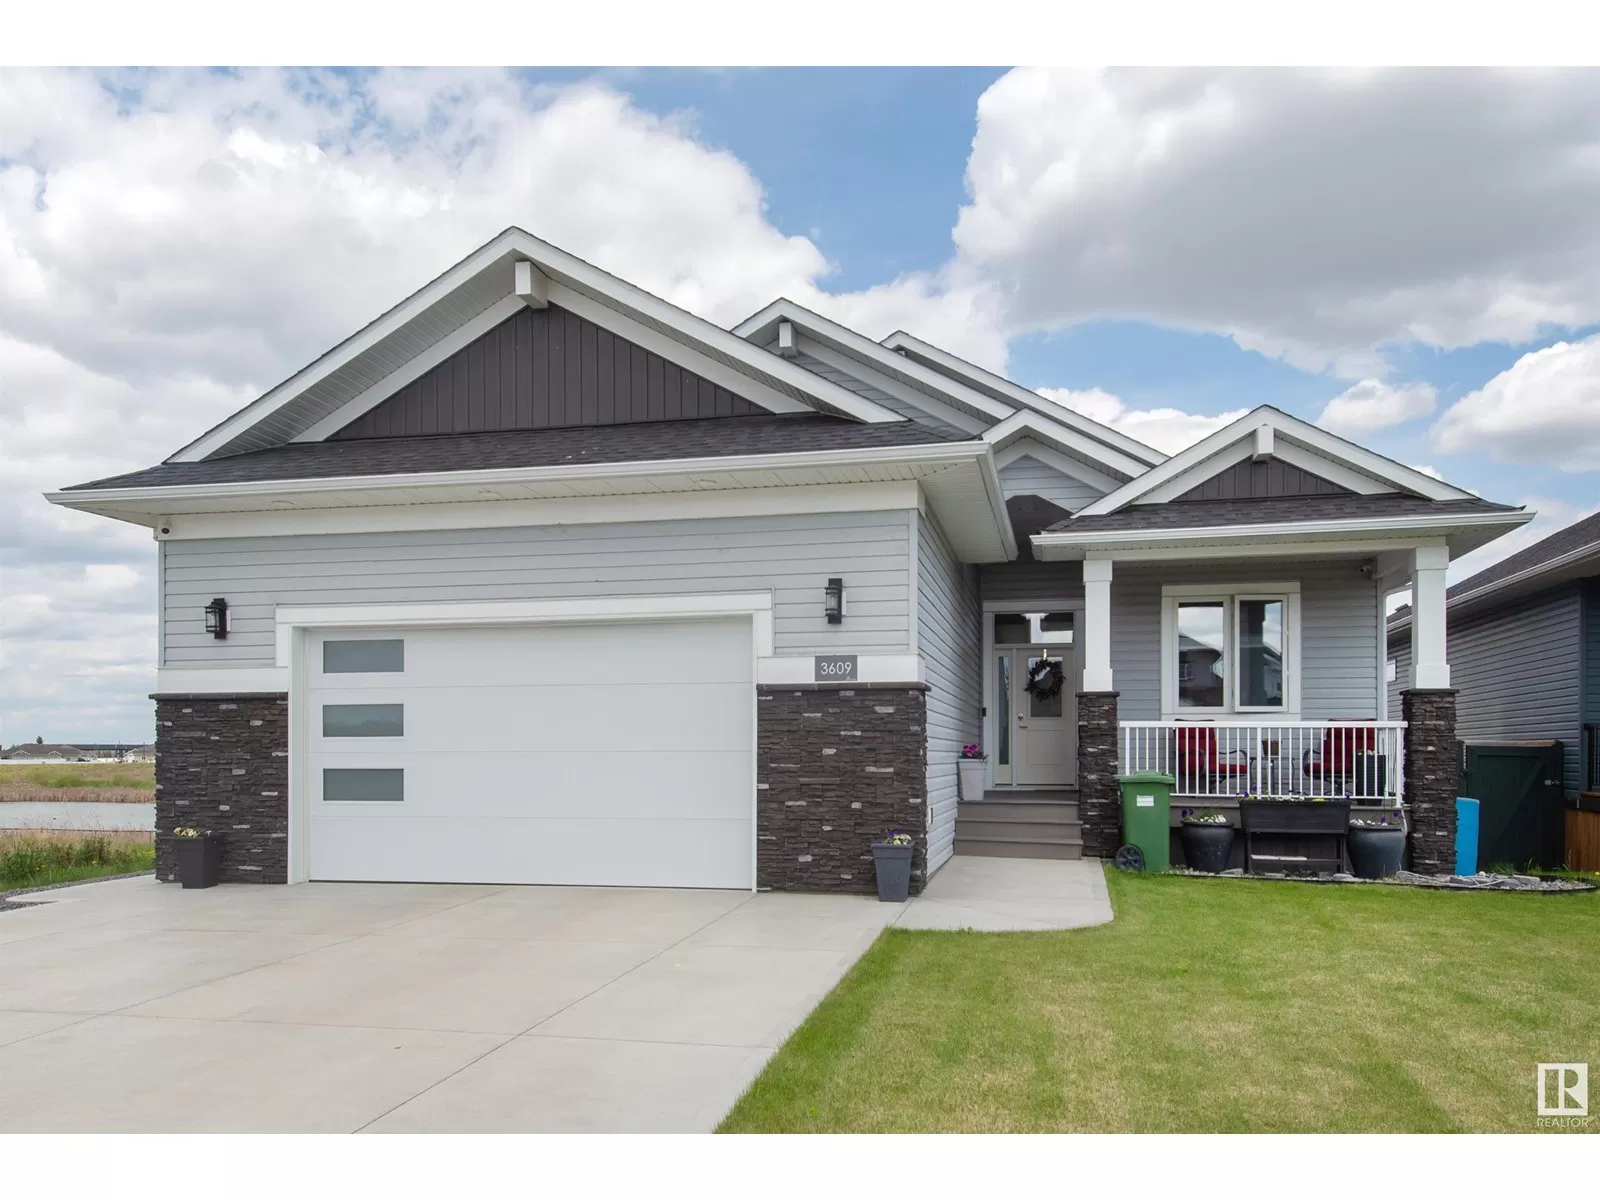 House for rent: 3609 Beau Vista Bv, Bonnyville Town, Alberta T9N 0C8